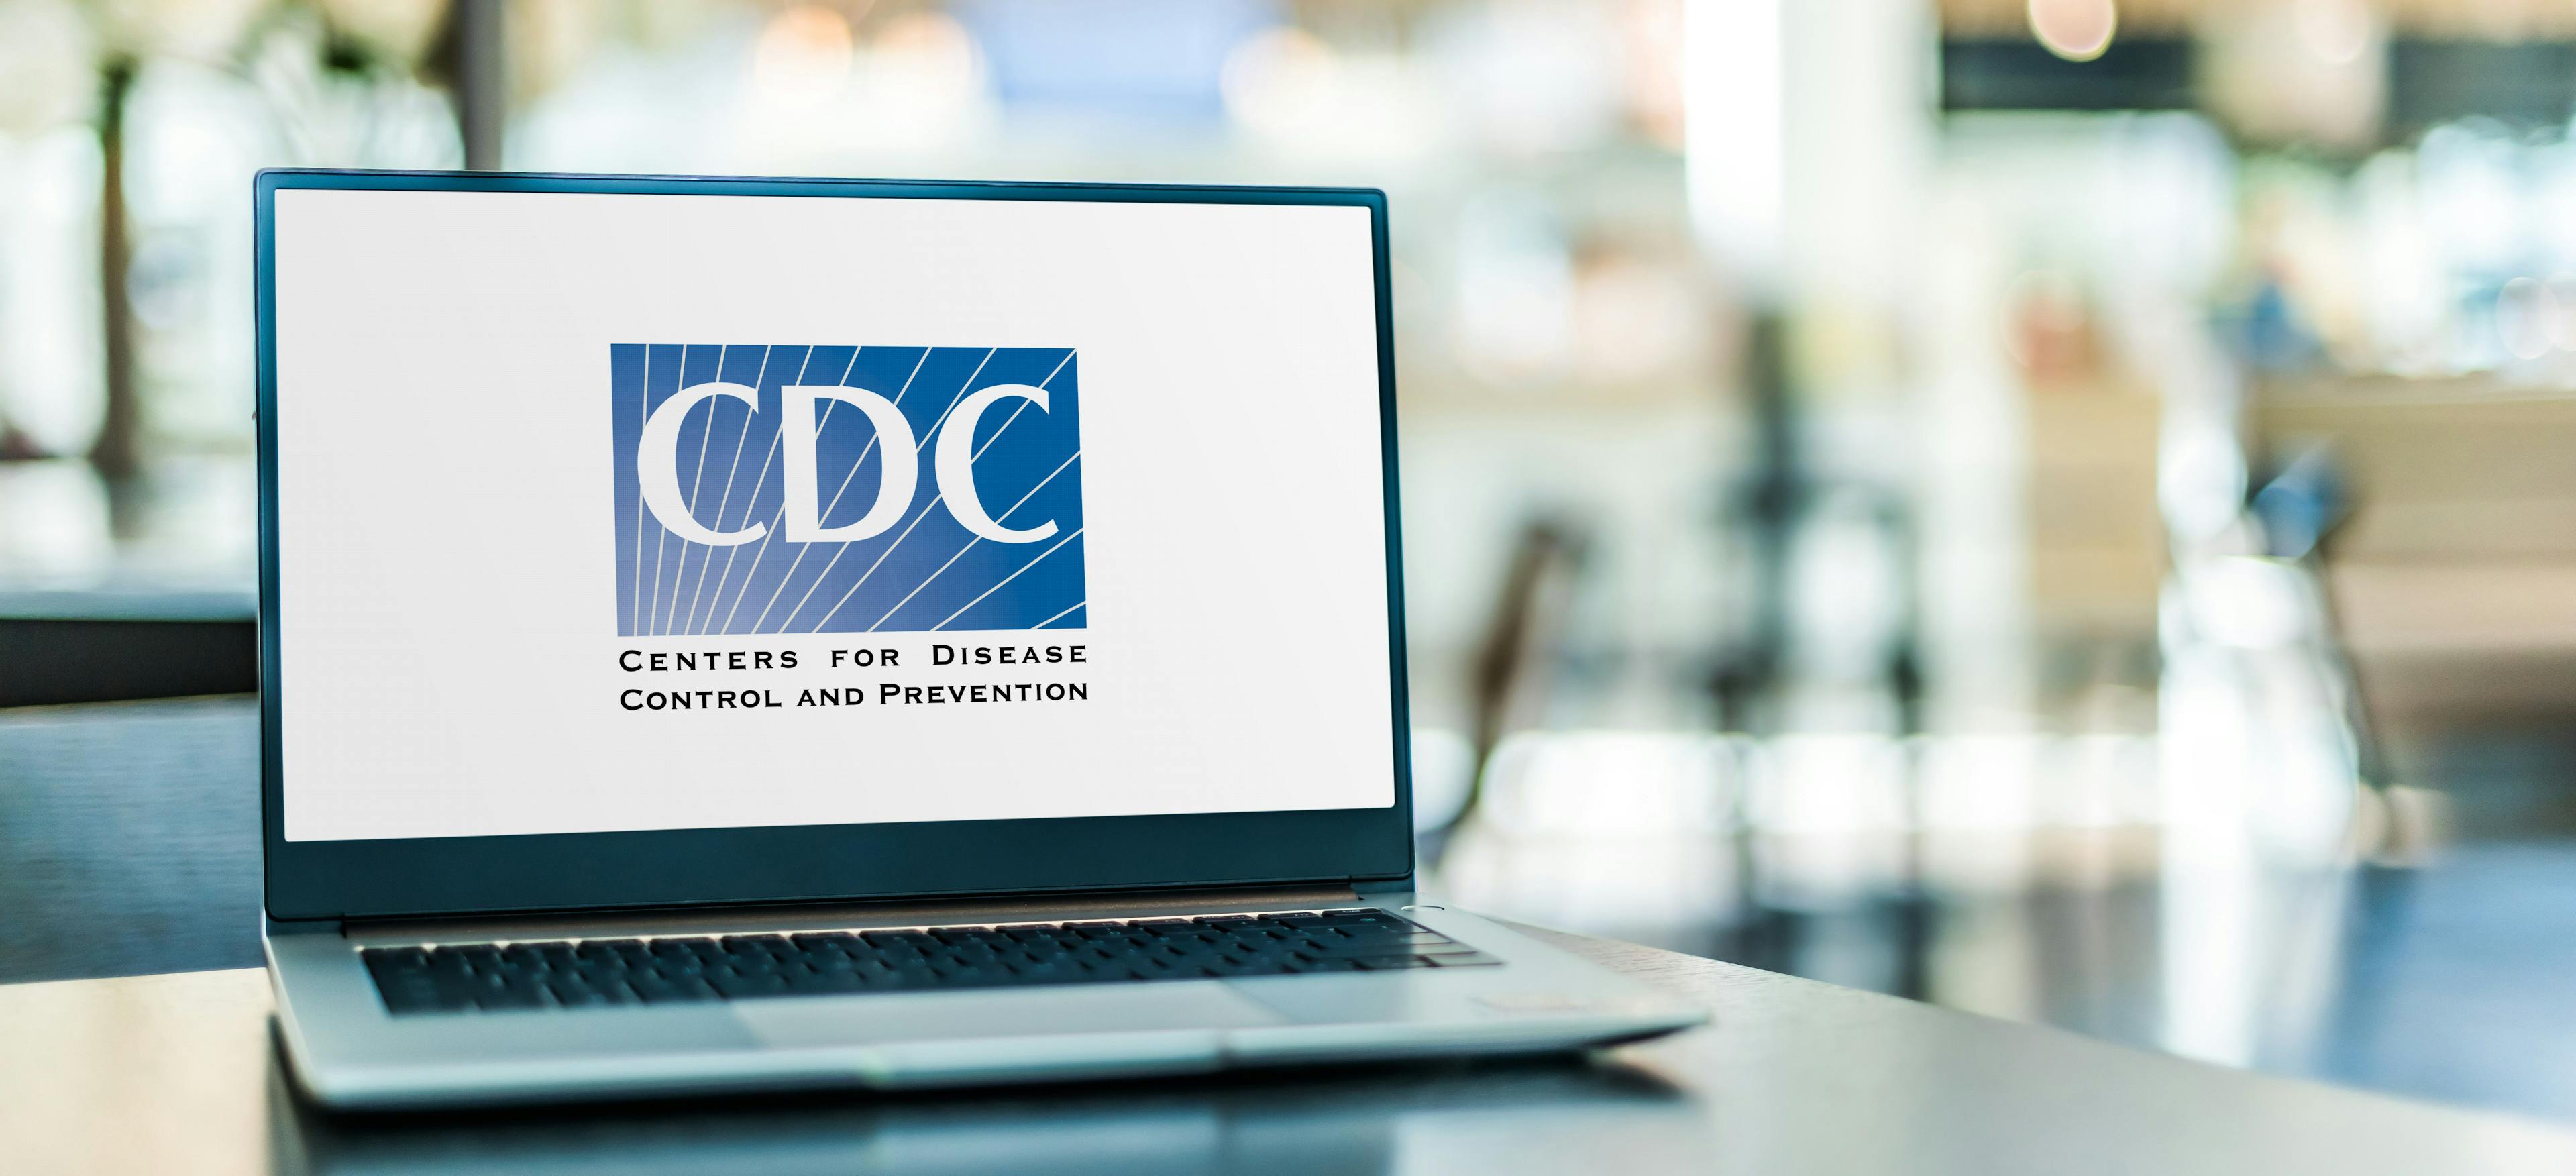 CDC Logo on Laptop | image credit: monticellllo - stock.adobe.com